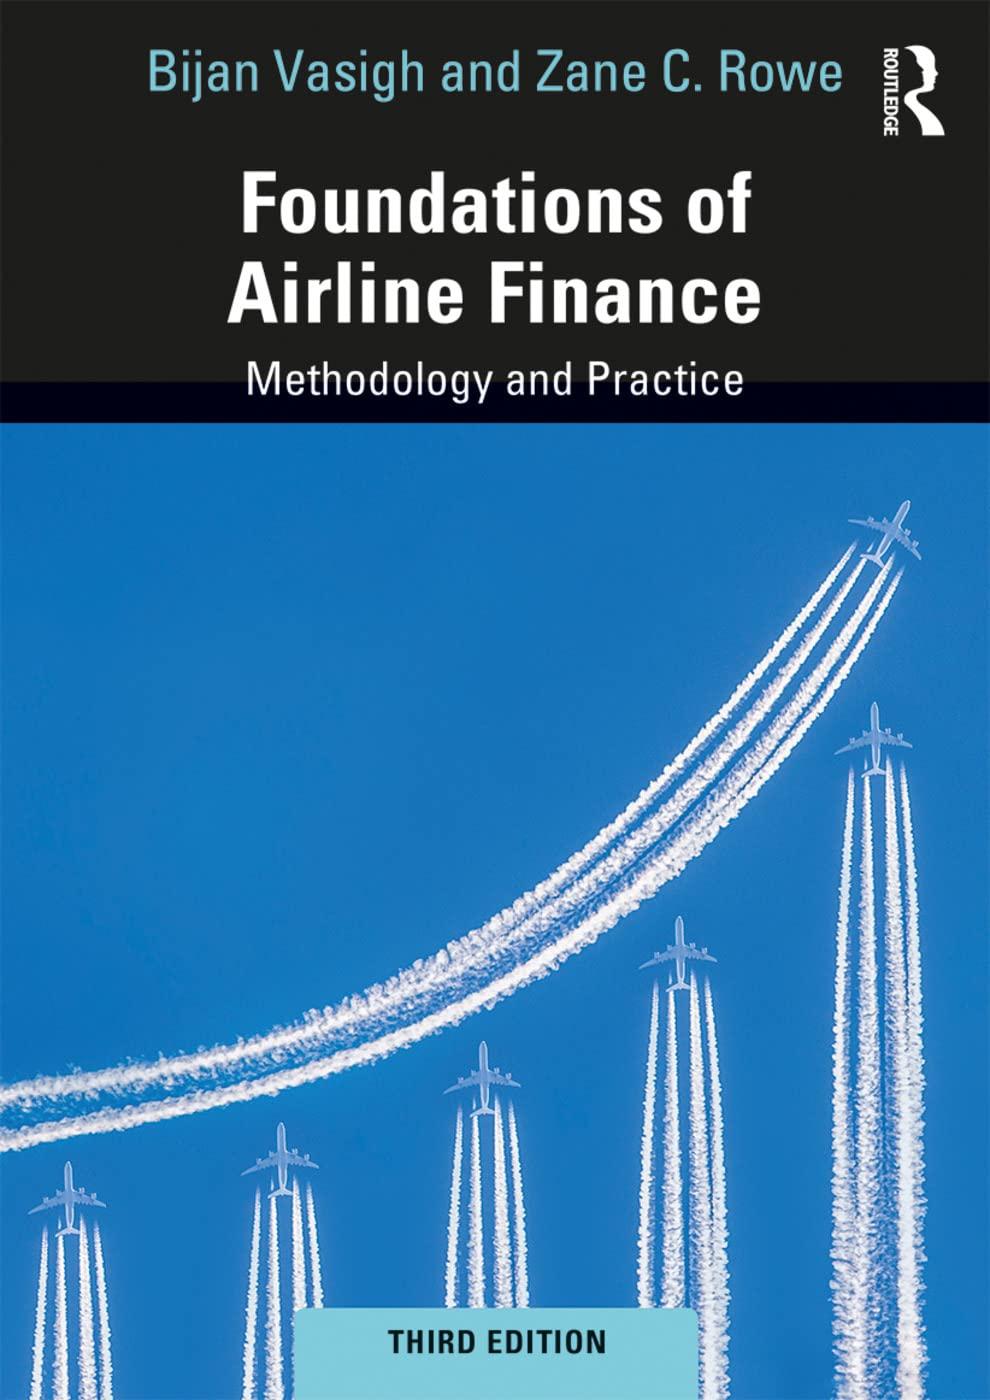 foundations of airline finance methodology and practice 3rd edition bijan vasigh, zane c. rowe 1138367818,